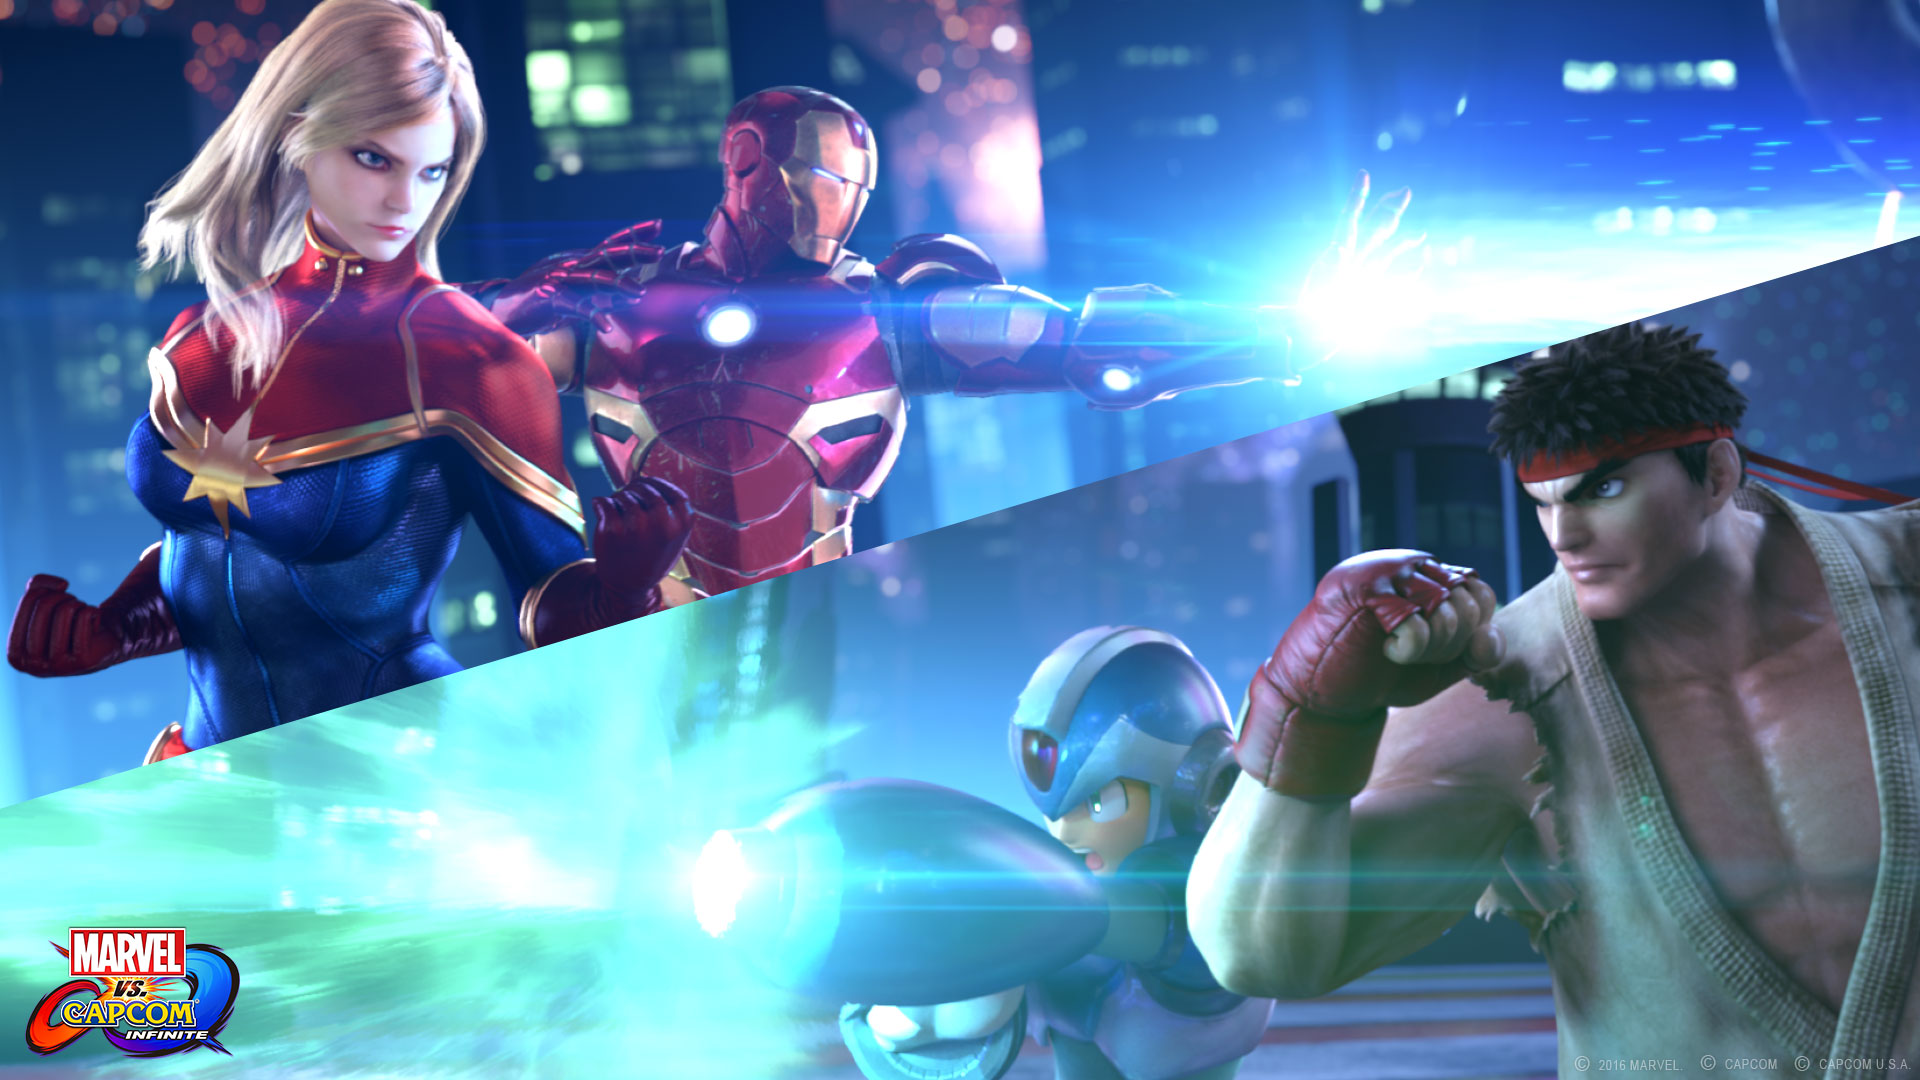 Marvel vs. Capcom : Clash of the Super Heroes [USA] - Playstation